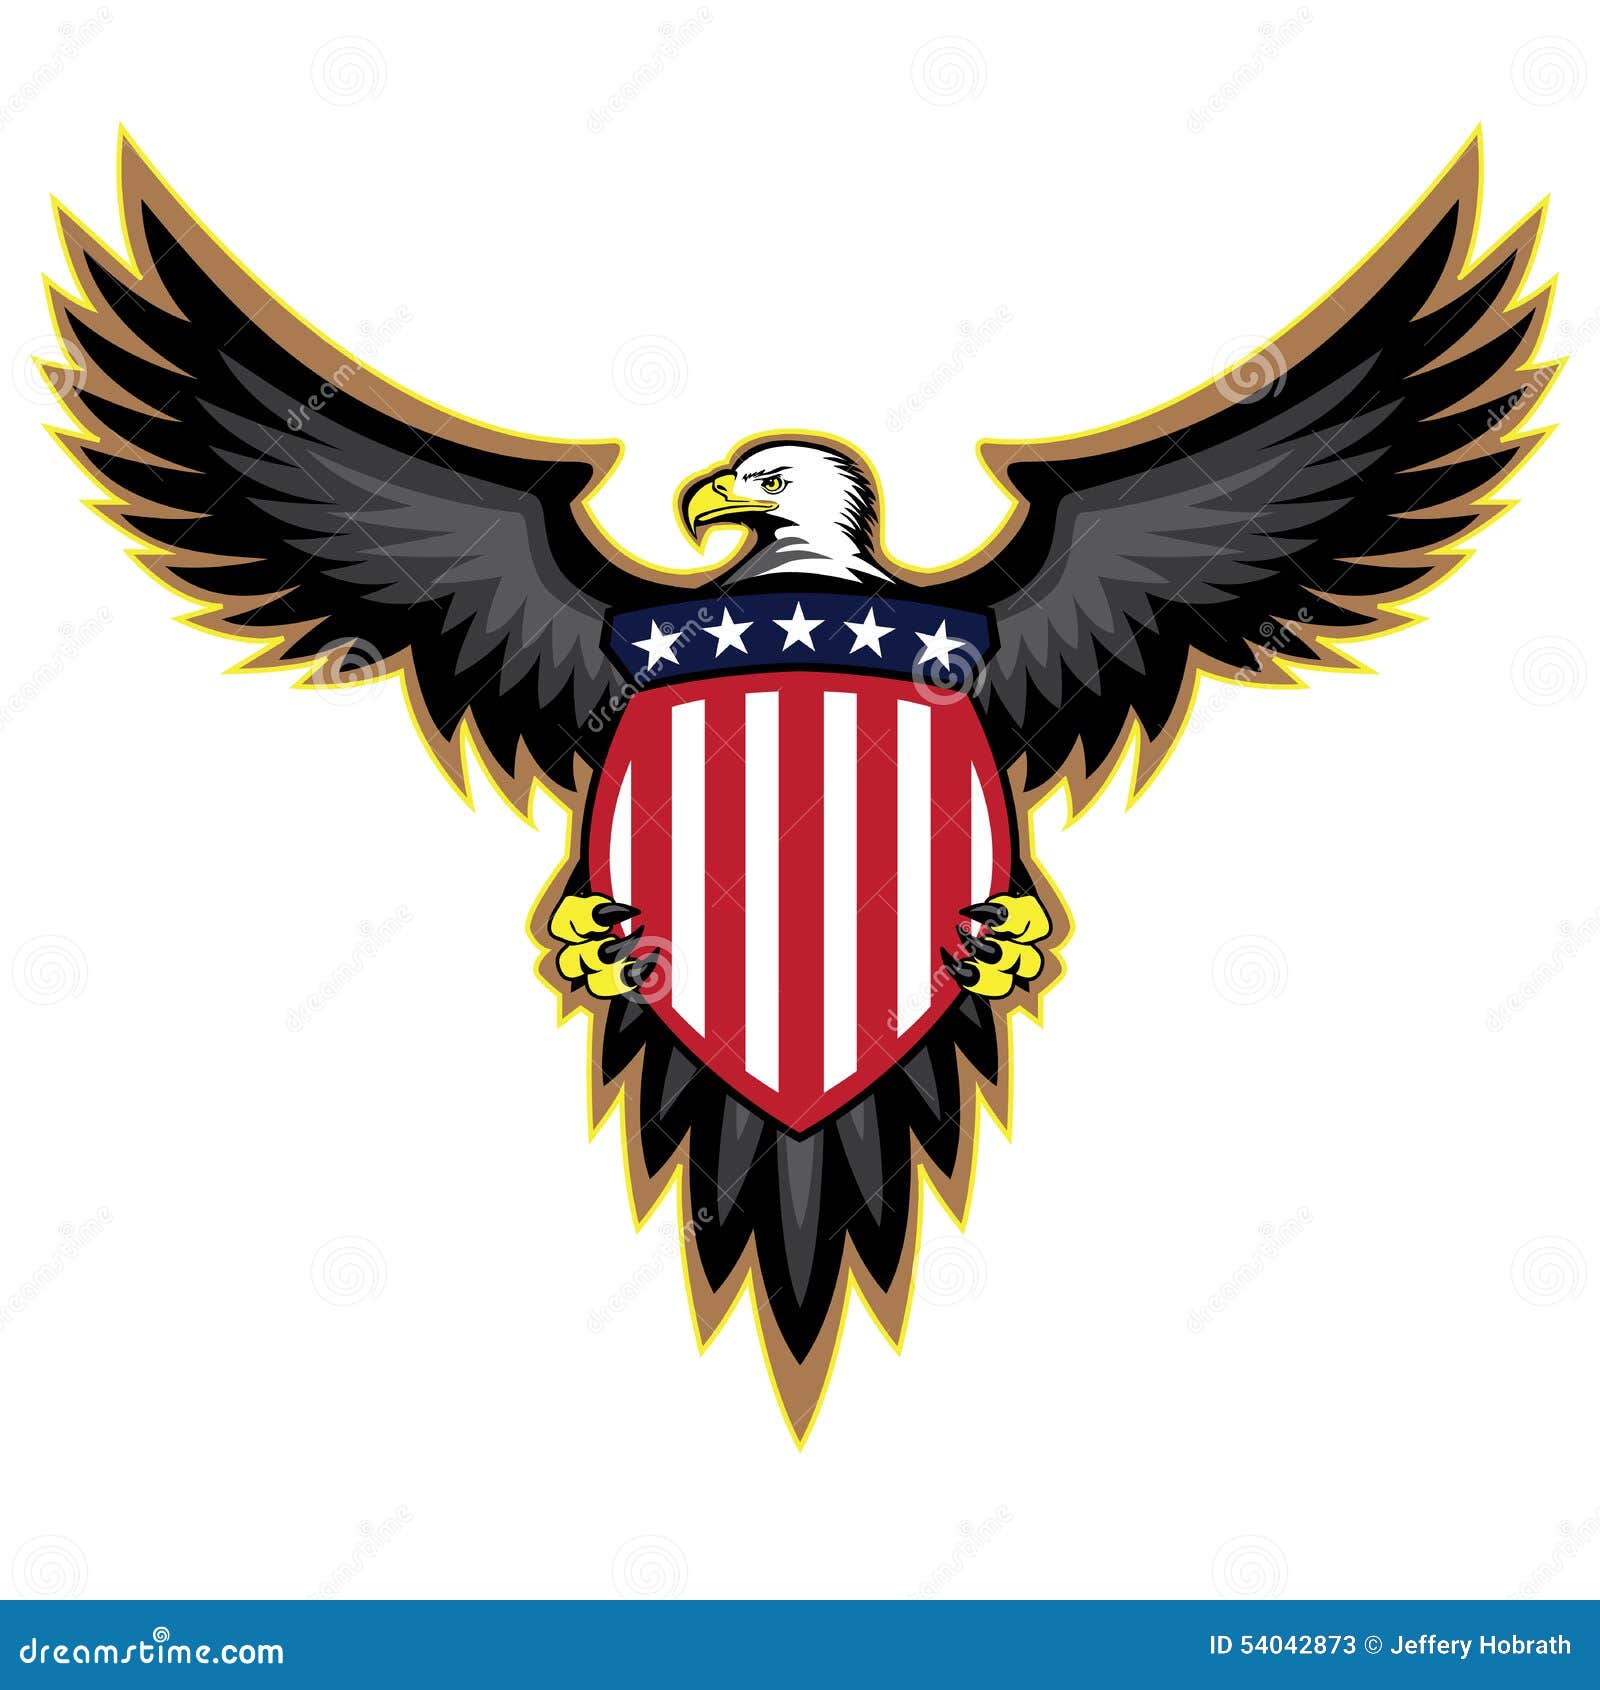 patriotic american eagle, wings spread, holding shield